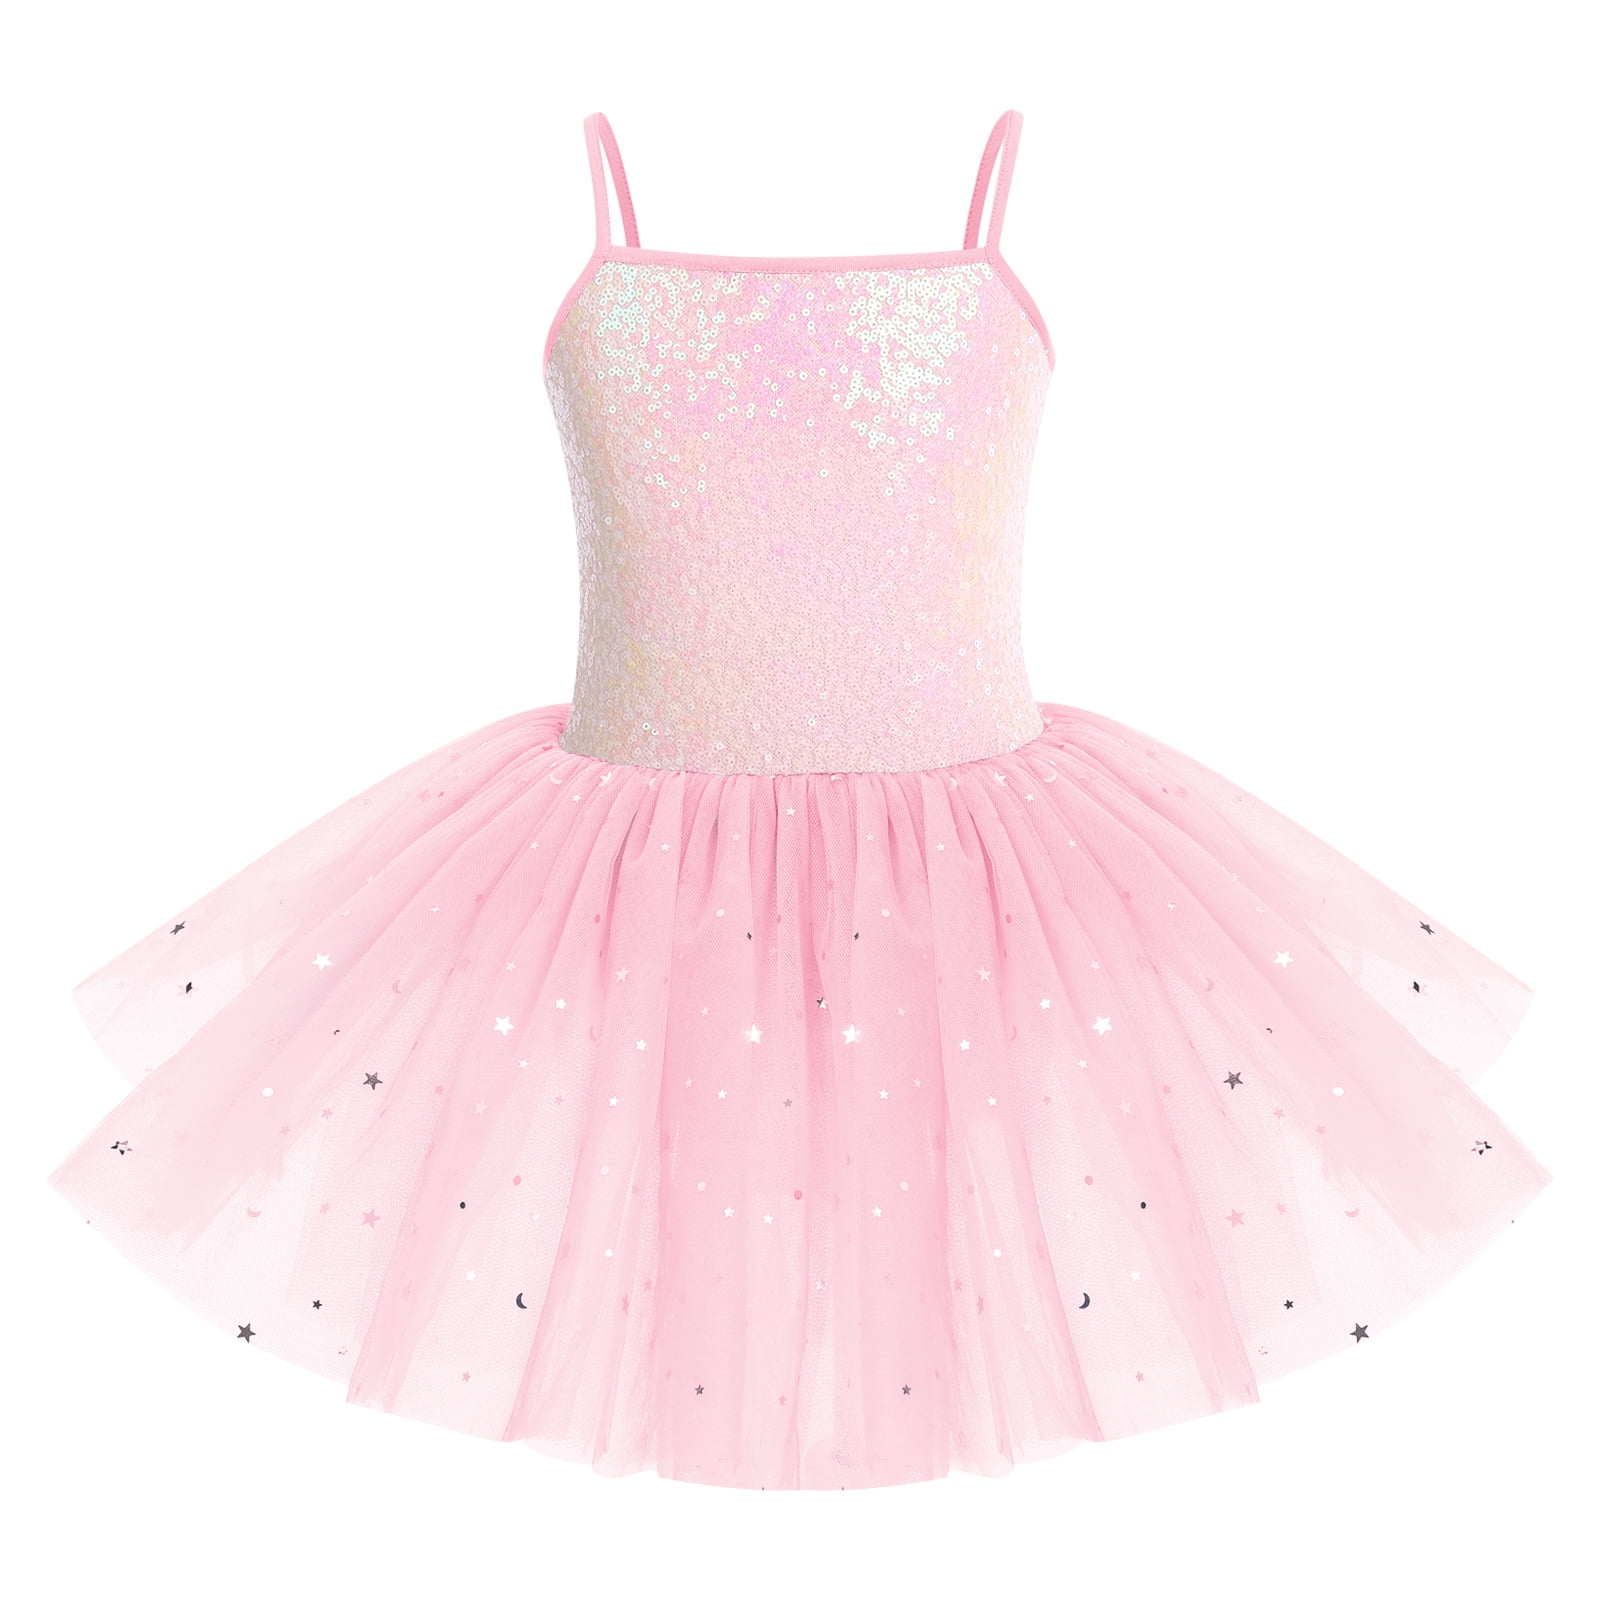 IMEKIS Ballerina Outfit for Girls Toddler Kids Sequins Ballet Dance Dress Tutu Skirted Leotard Glitter Shiny Camisole Ballerina Dancewear Gymnastics Stage Performance 9-10 Years Pink